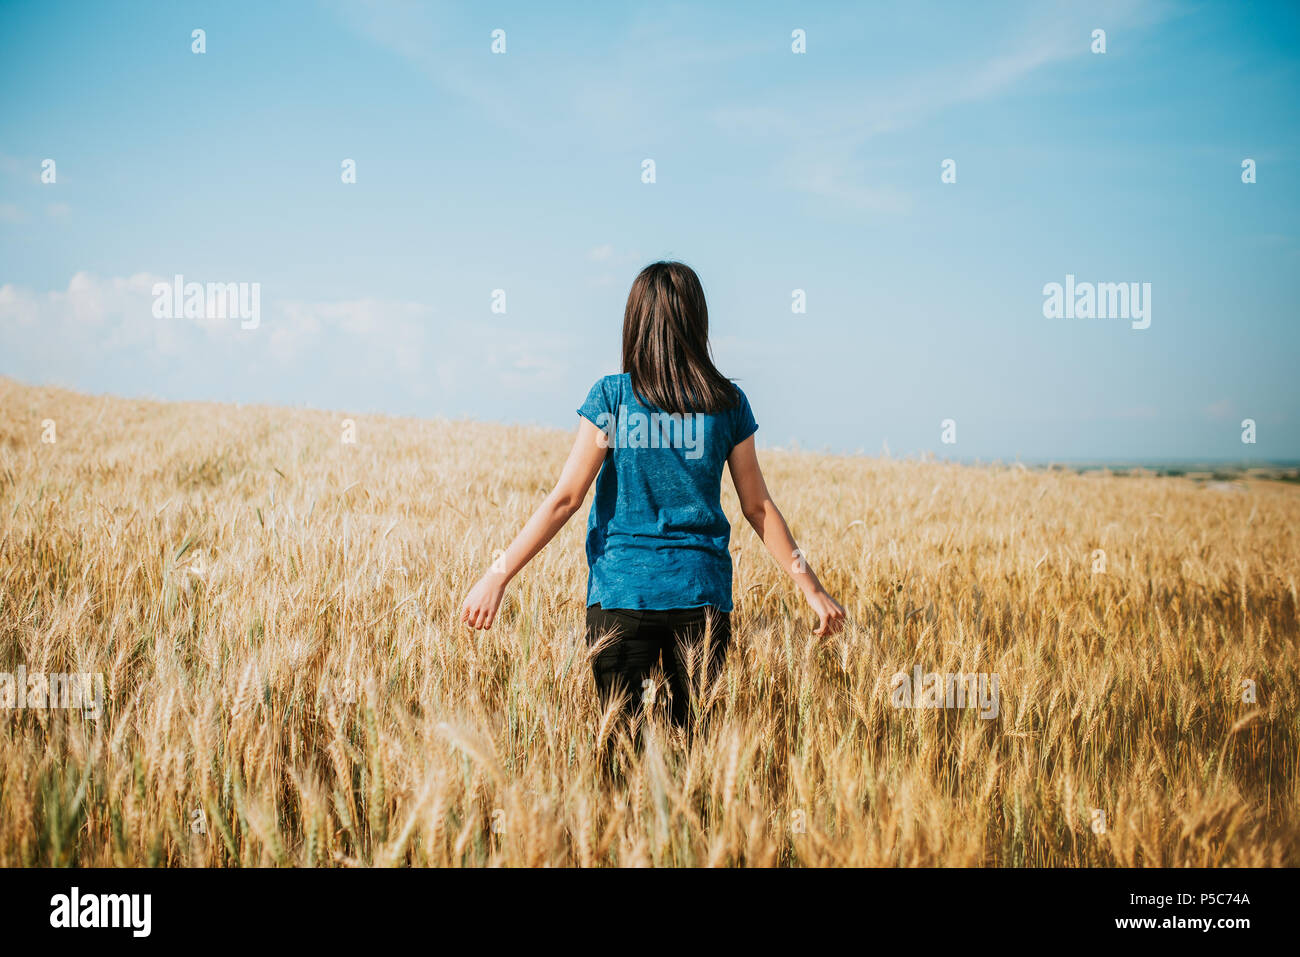 woman walking through wheat field, dolly shot. Girl's hand touching wheat ears Stock Photo